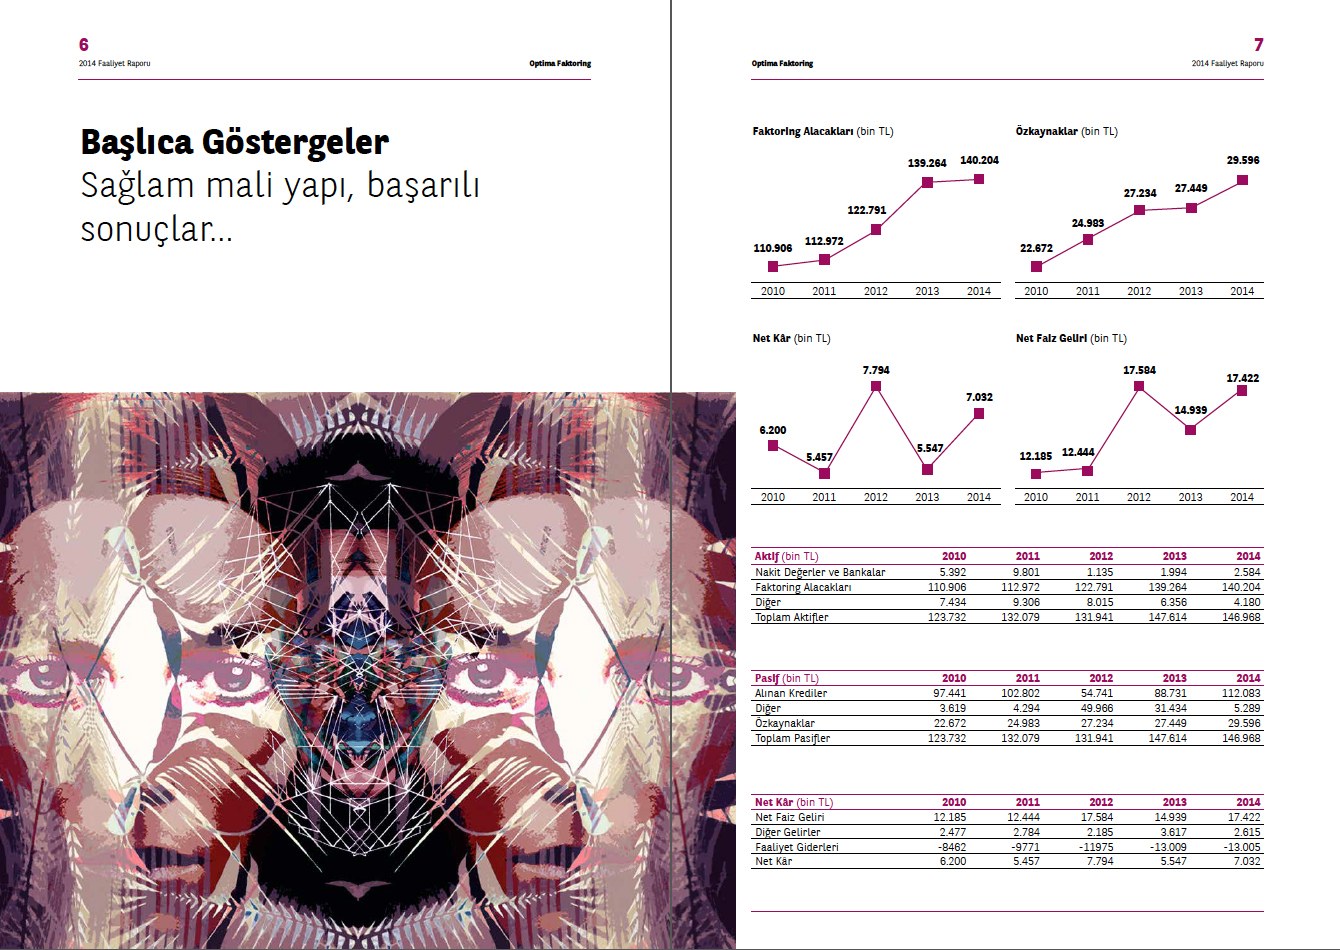 OPTİMA FAKTORİNG / 2014 Faaliyet Raporu / 2014 Annual Report